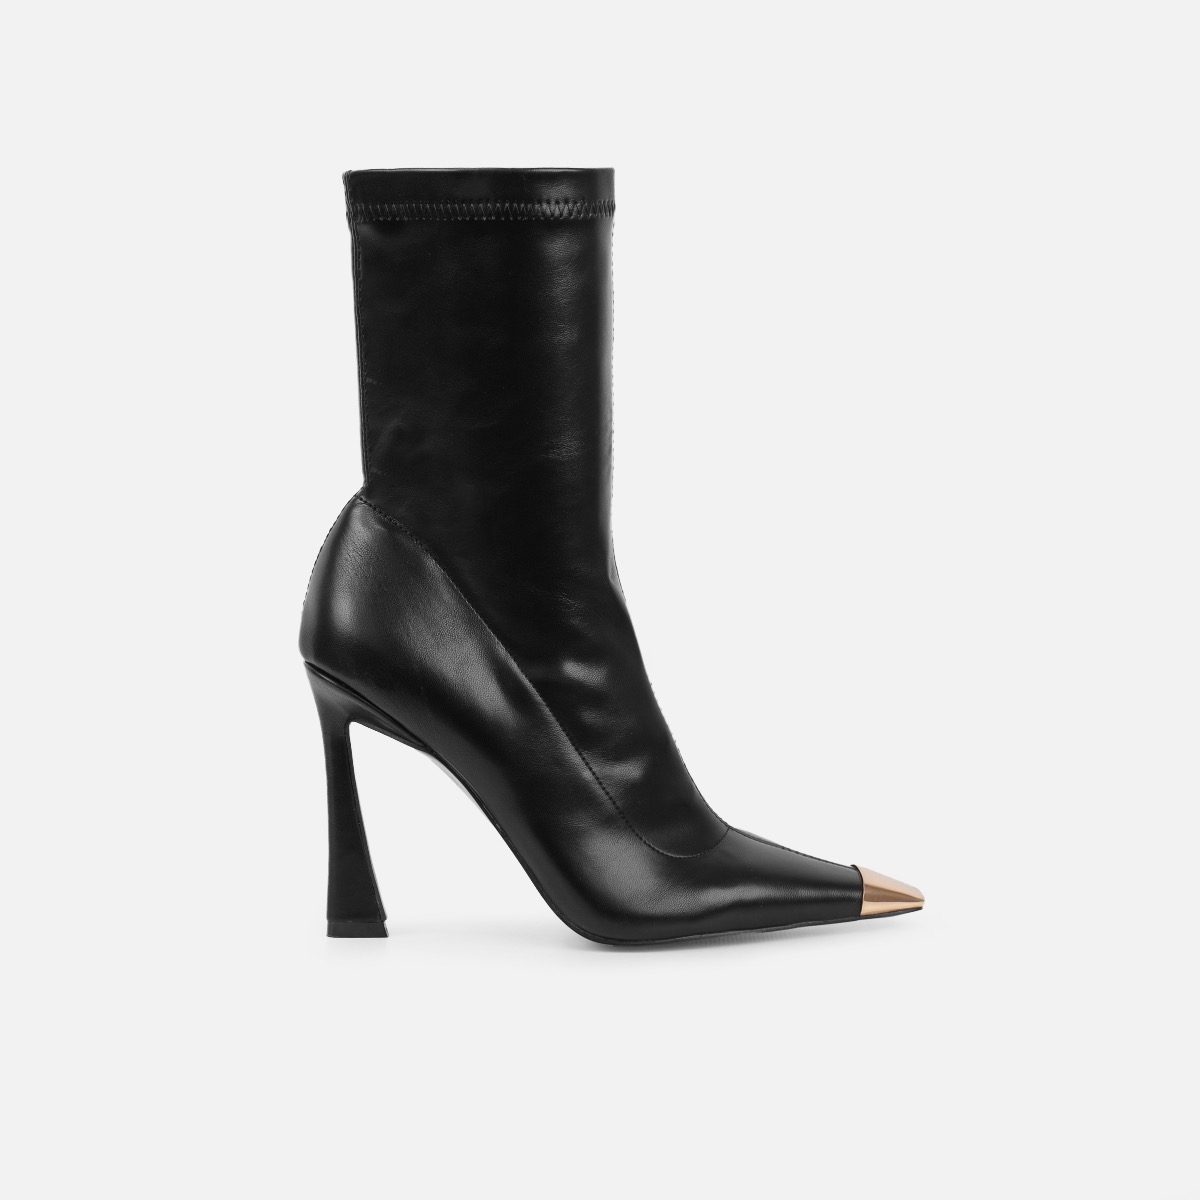 Simmi London Martha Wide Fit platform heel knee boots in olive green | ASOS  | Ankle strap sandals heels, Boots, Strappy high heels sandals